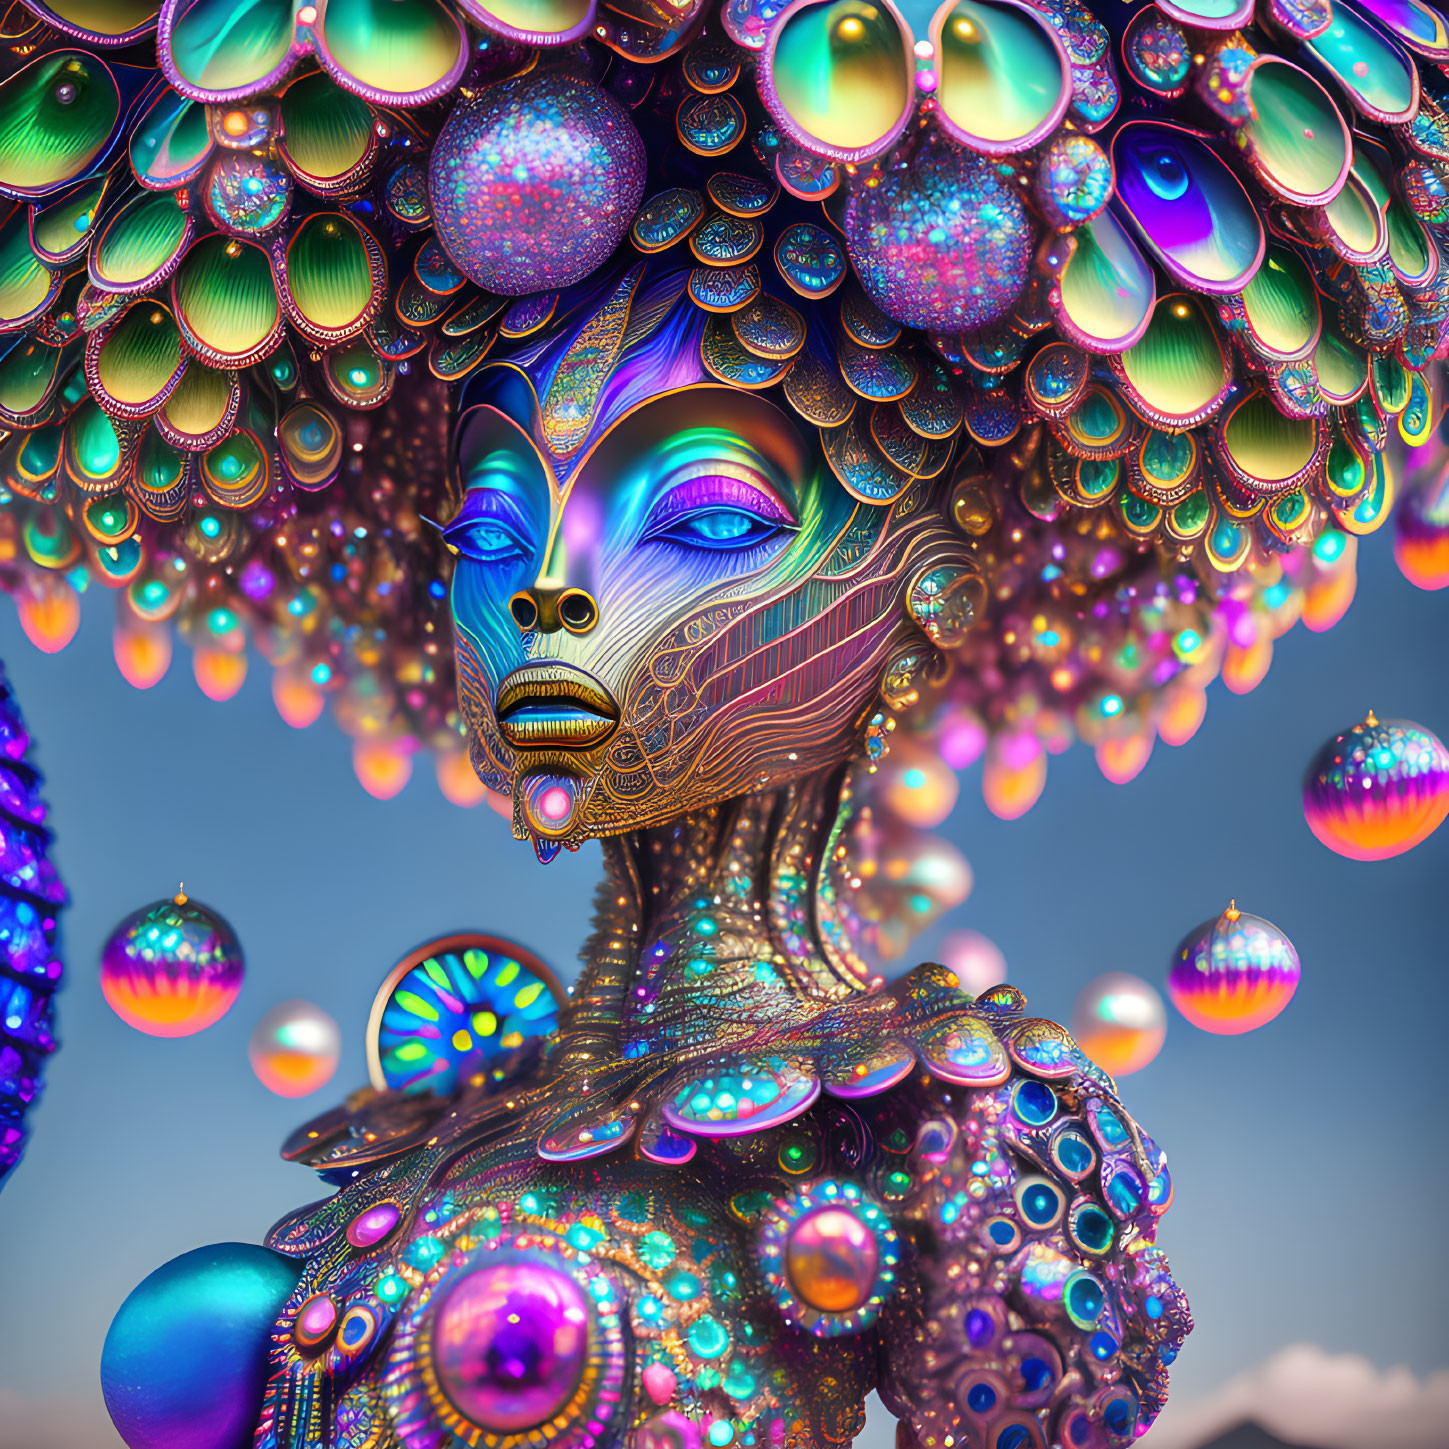 Vibrant futuristic female figure with iridescent headpiece and metallic blue skin